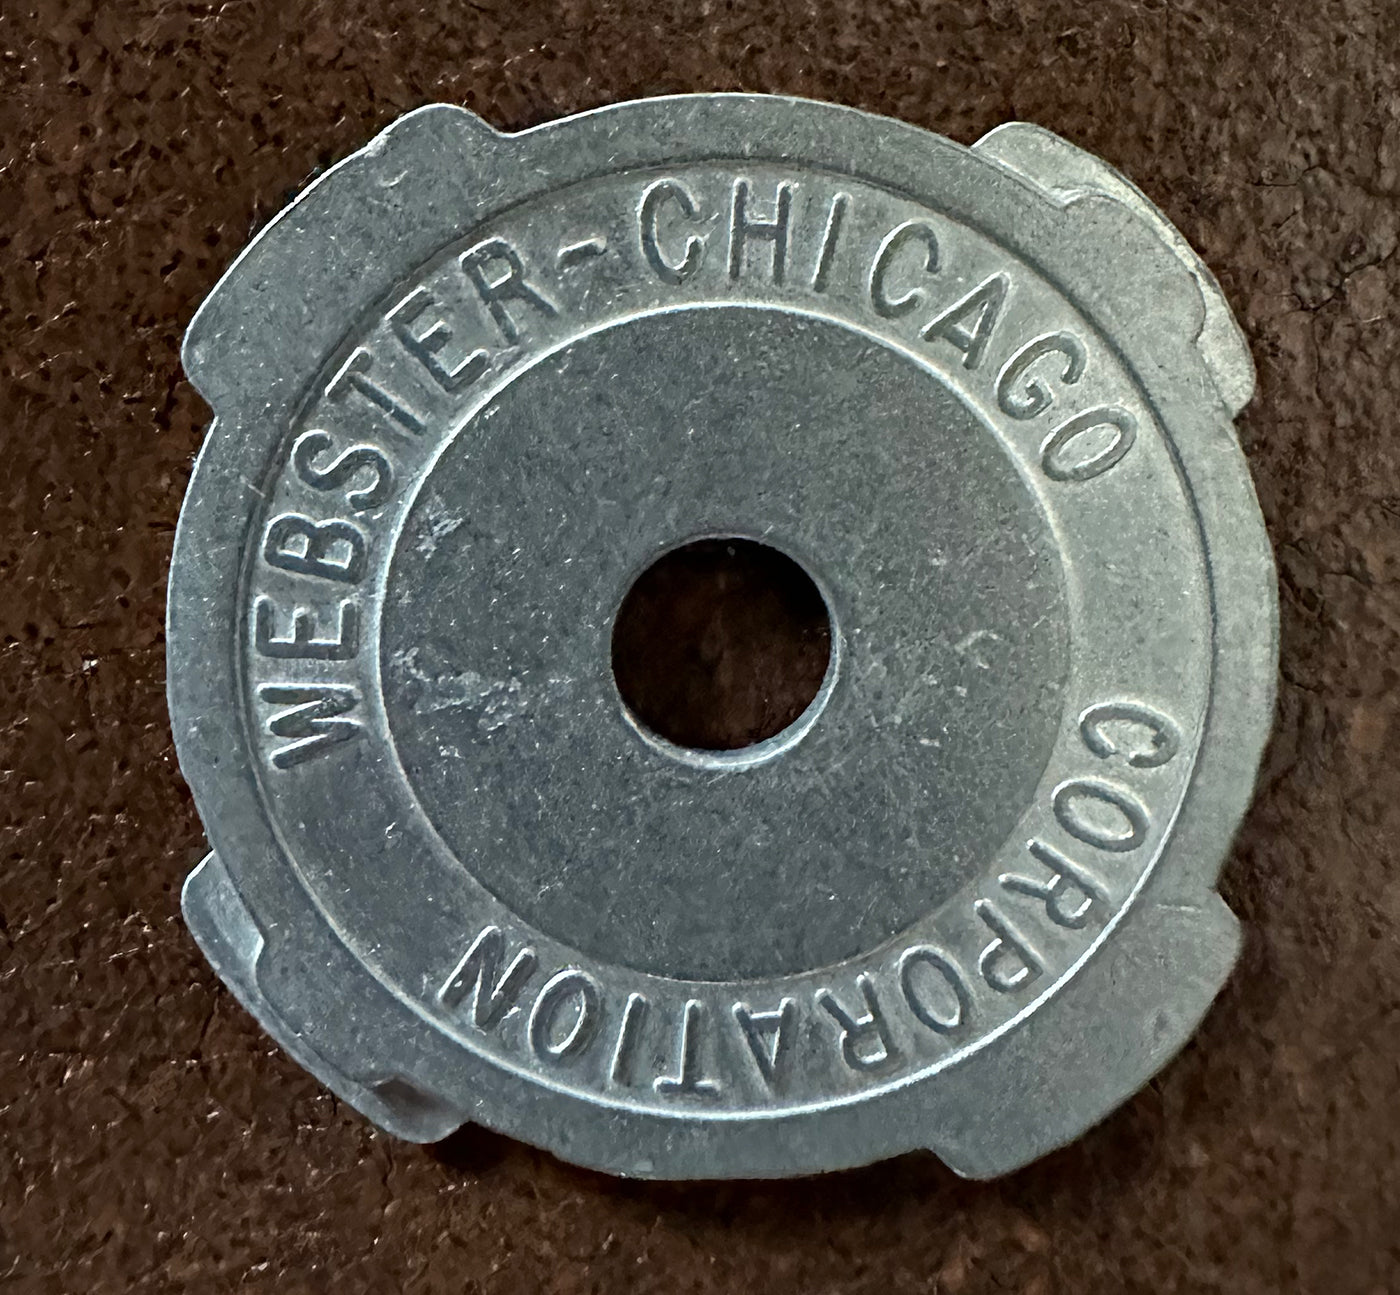 45 RPM Record Metal Insert Adapter - Webster-Chicago - 1950's Originals, 2-Pack